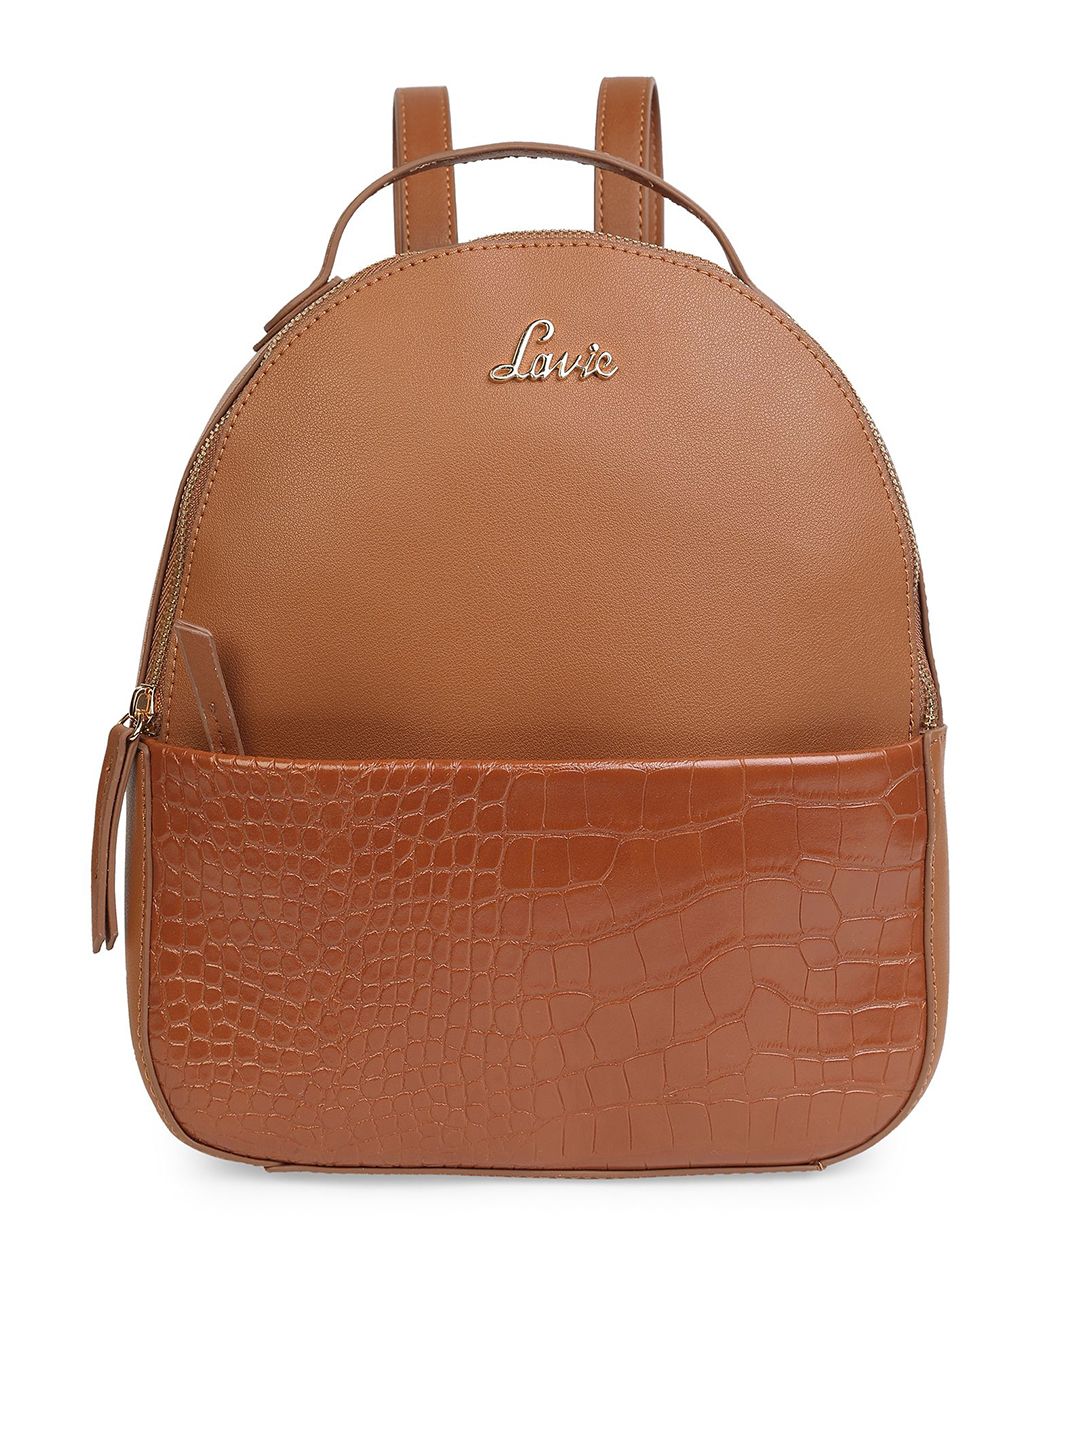 Lavie Women Tan Brown Croc Textured Backpack Price in India